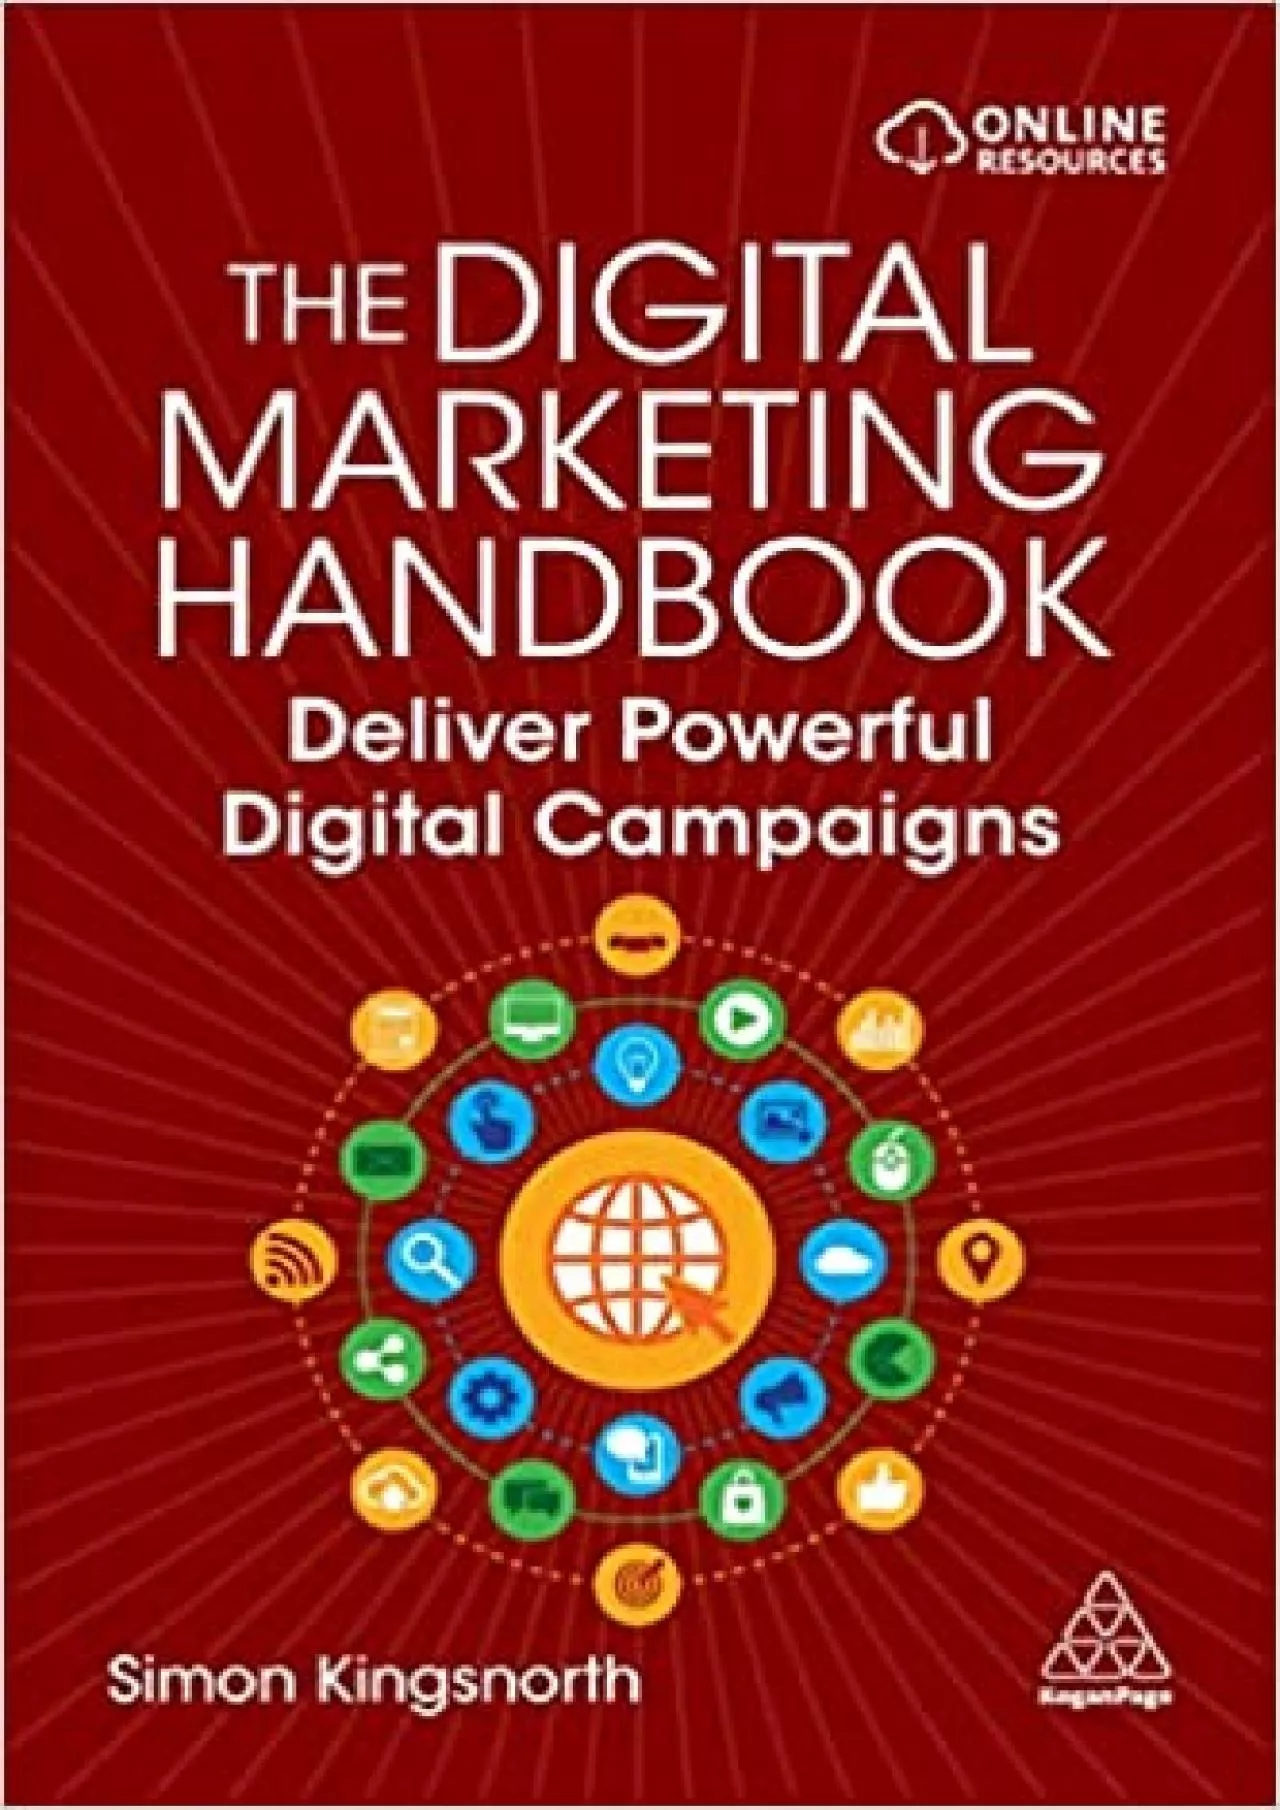 The Digital Marketing Handbook Deliver Powerful Digital Campaigns